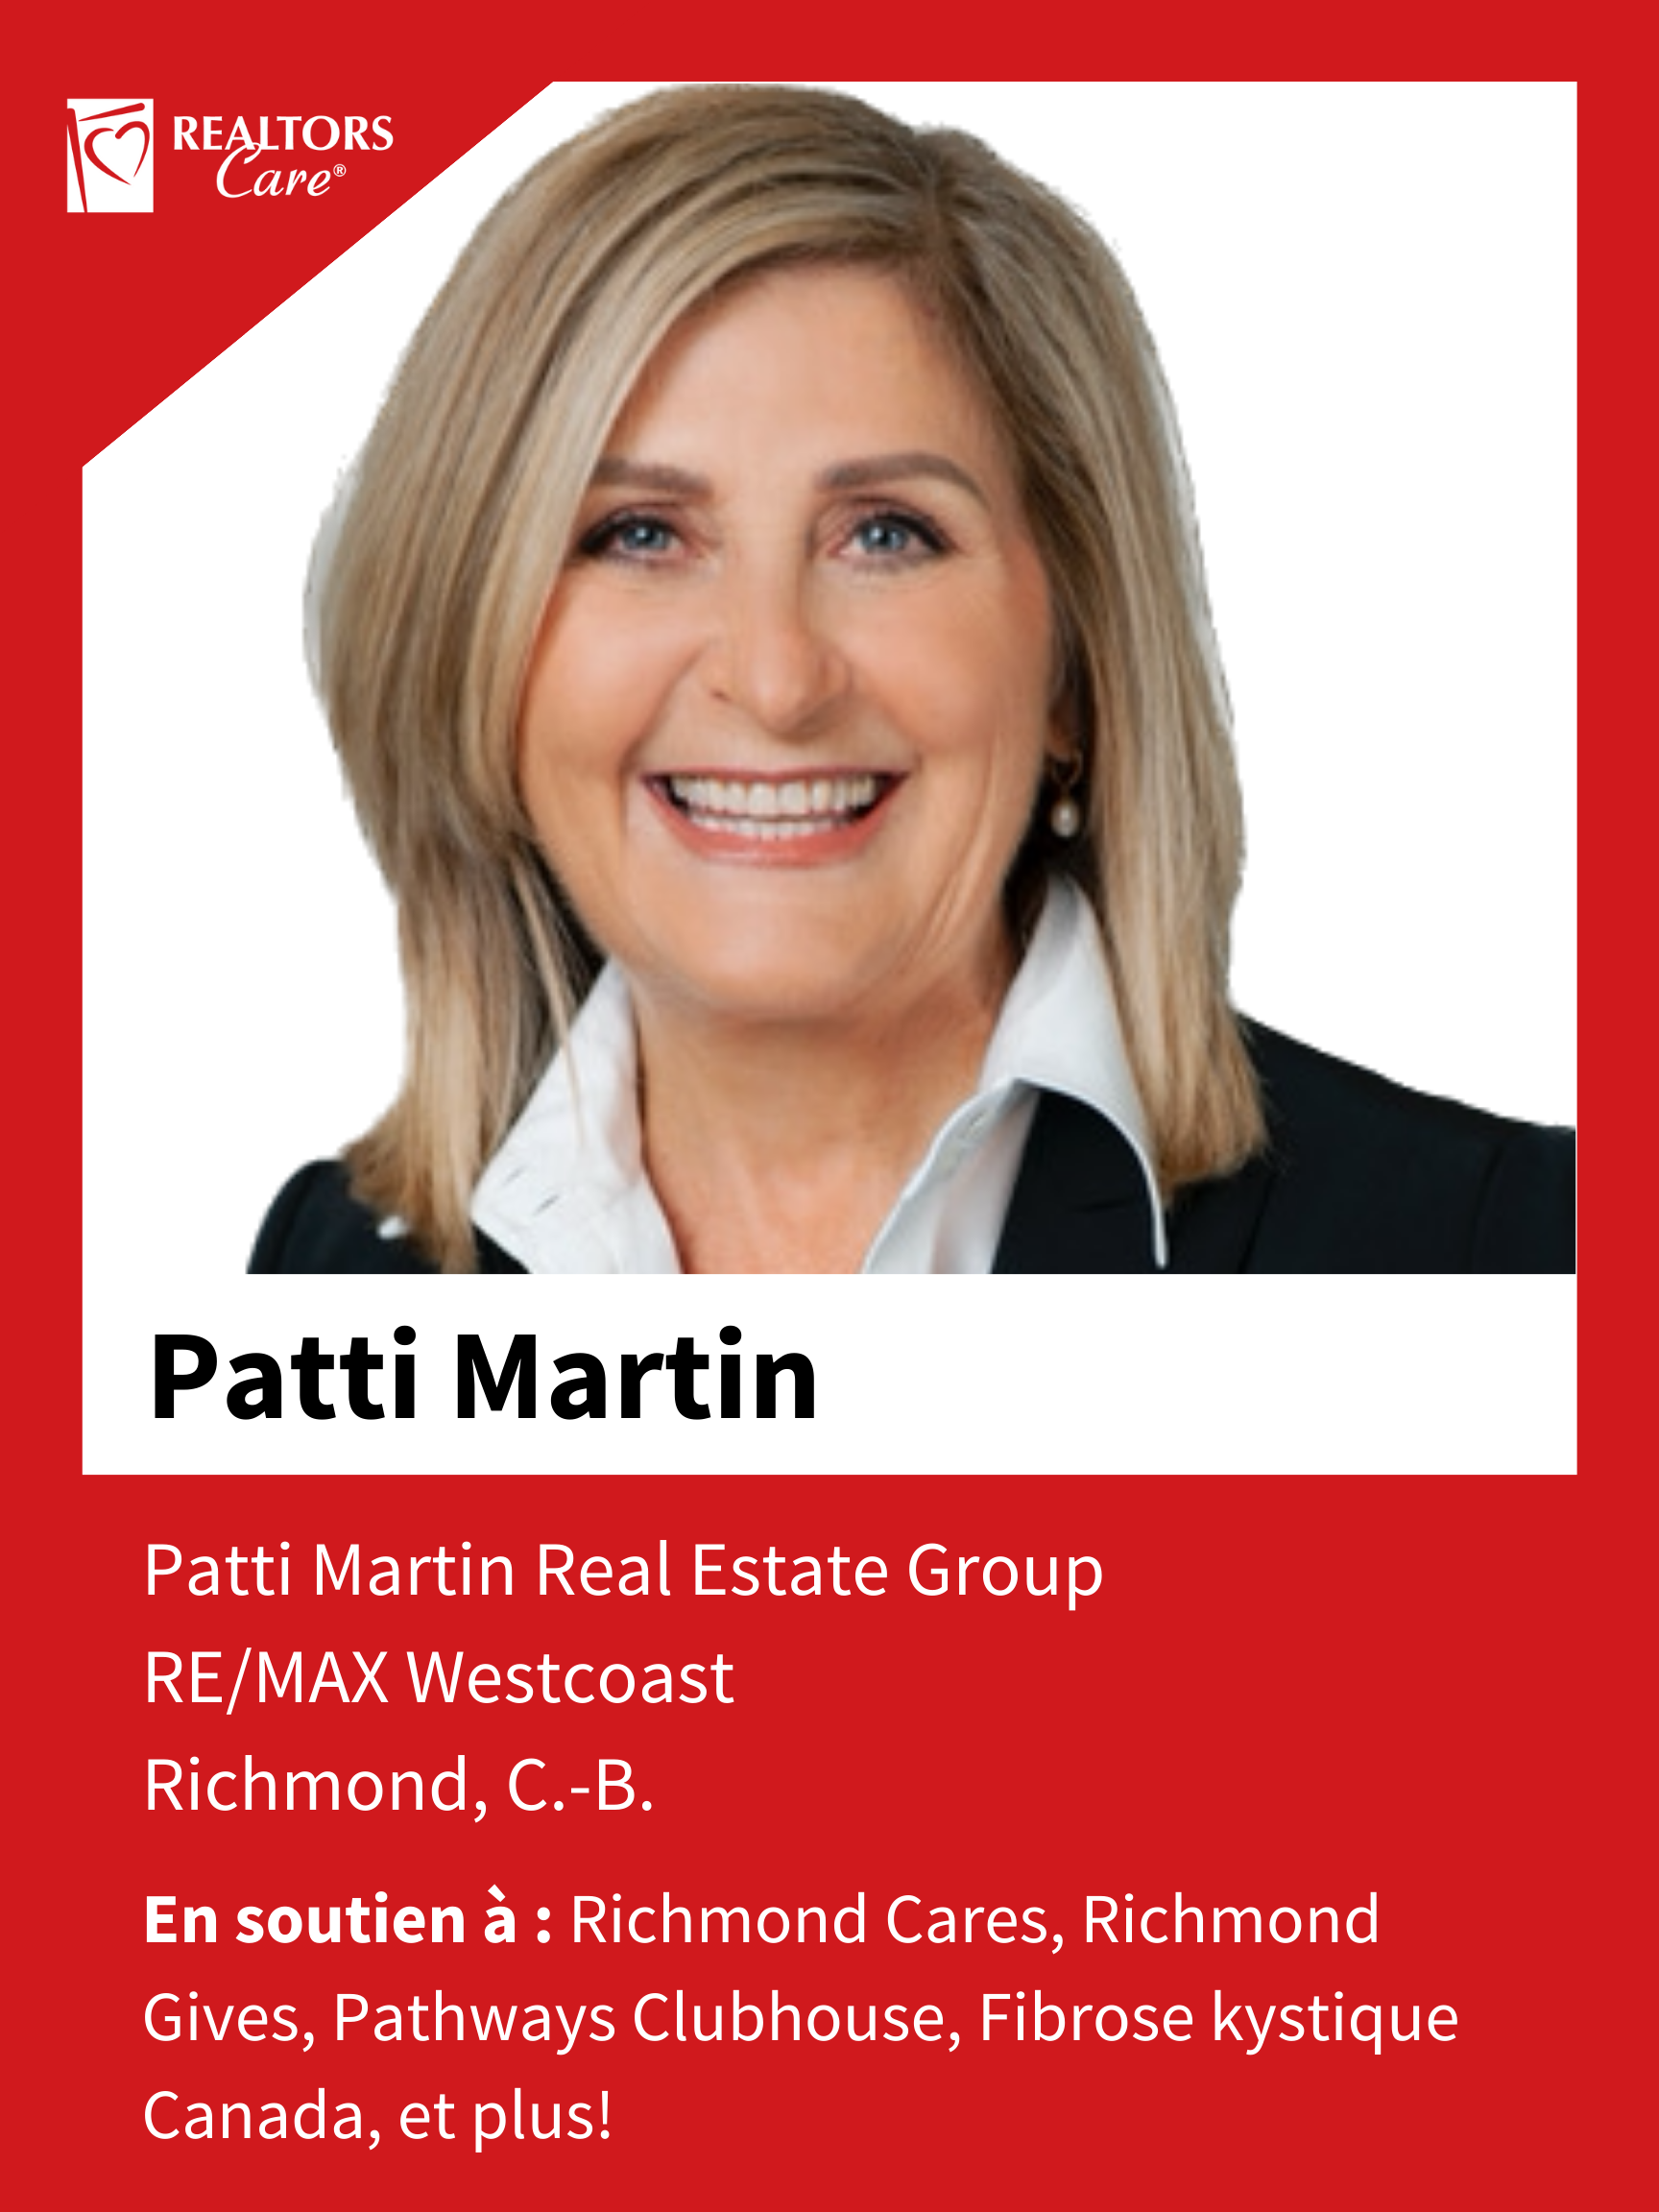 Patti Martin
Richmond C.-B.
